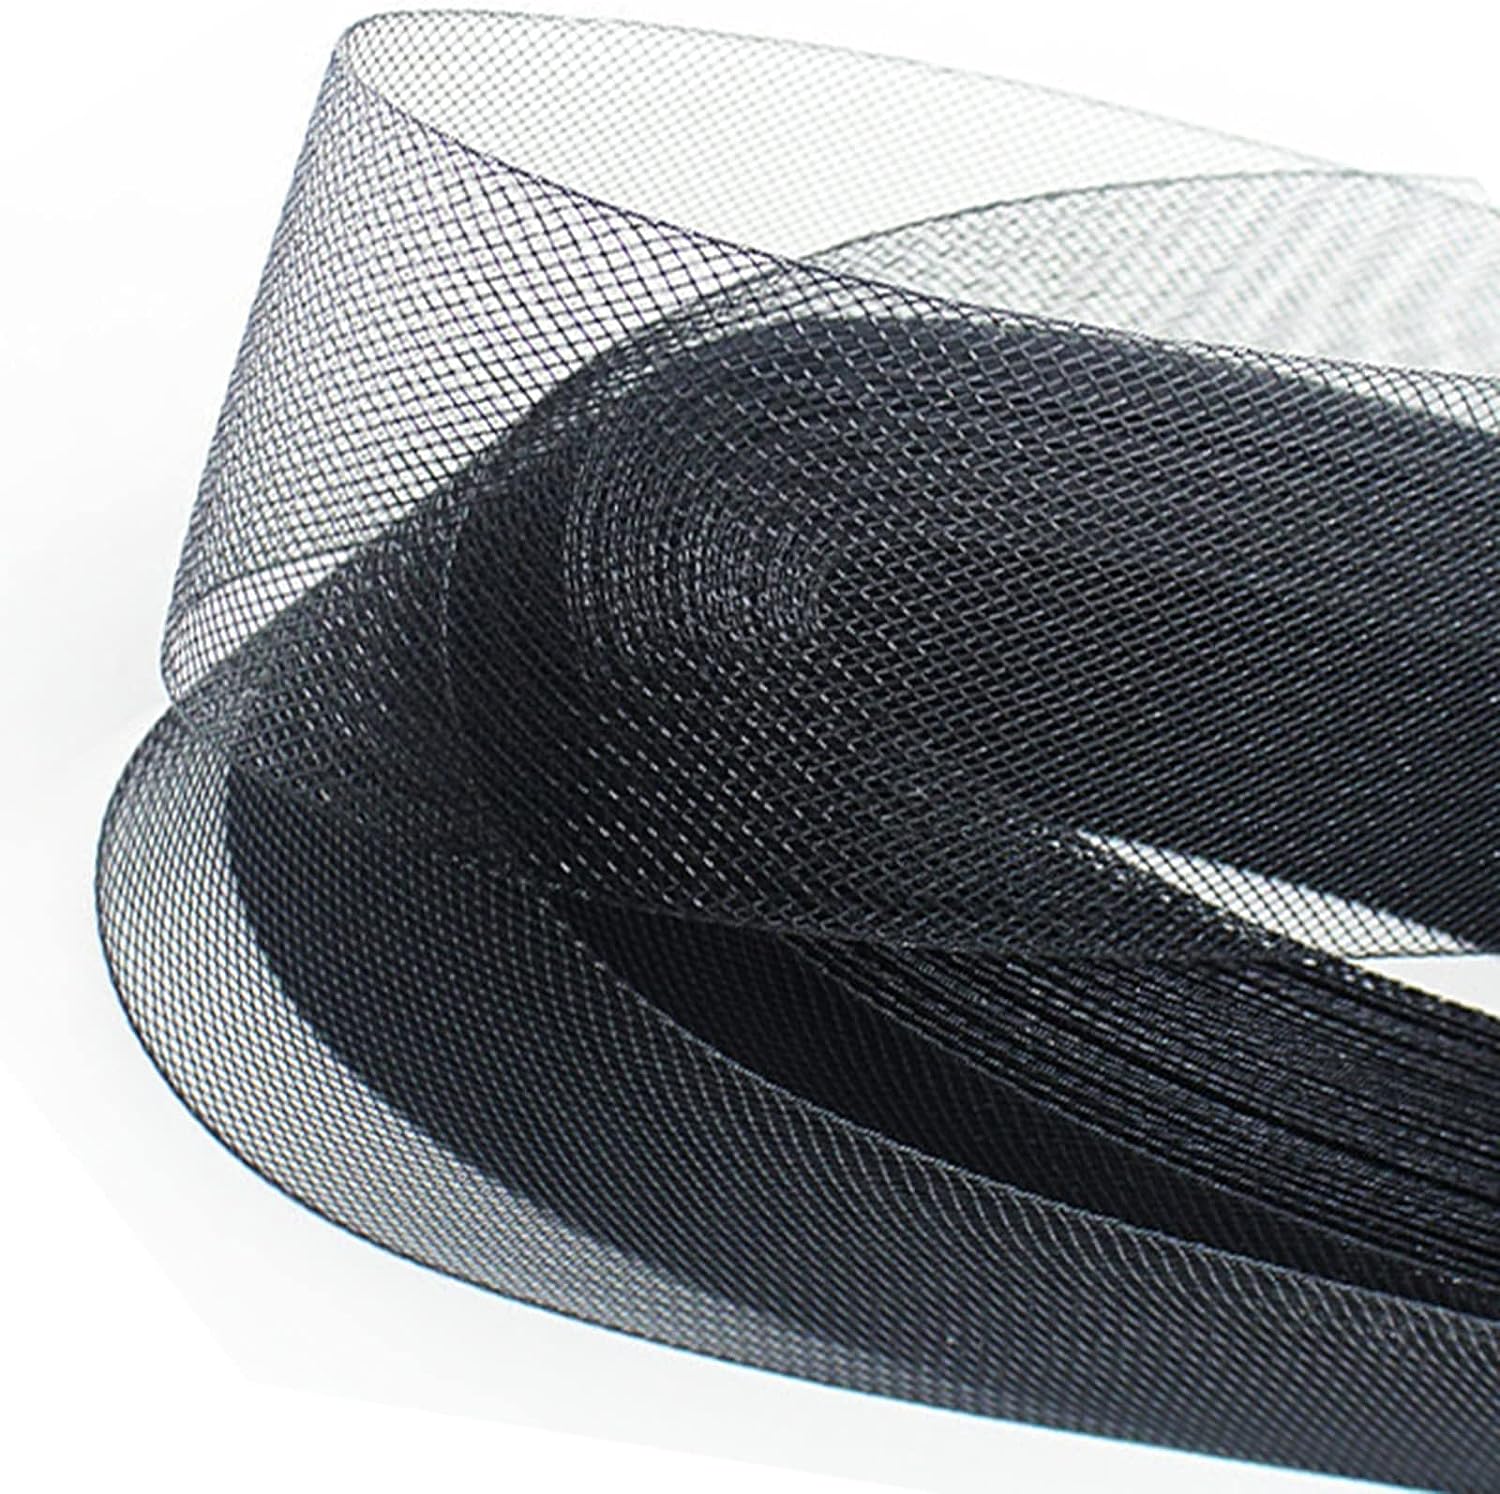 Wefab Black horsehair Braid/Boning Crinoline Cancan Net Strip/Trim Boutique Fabric